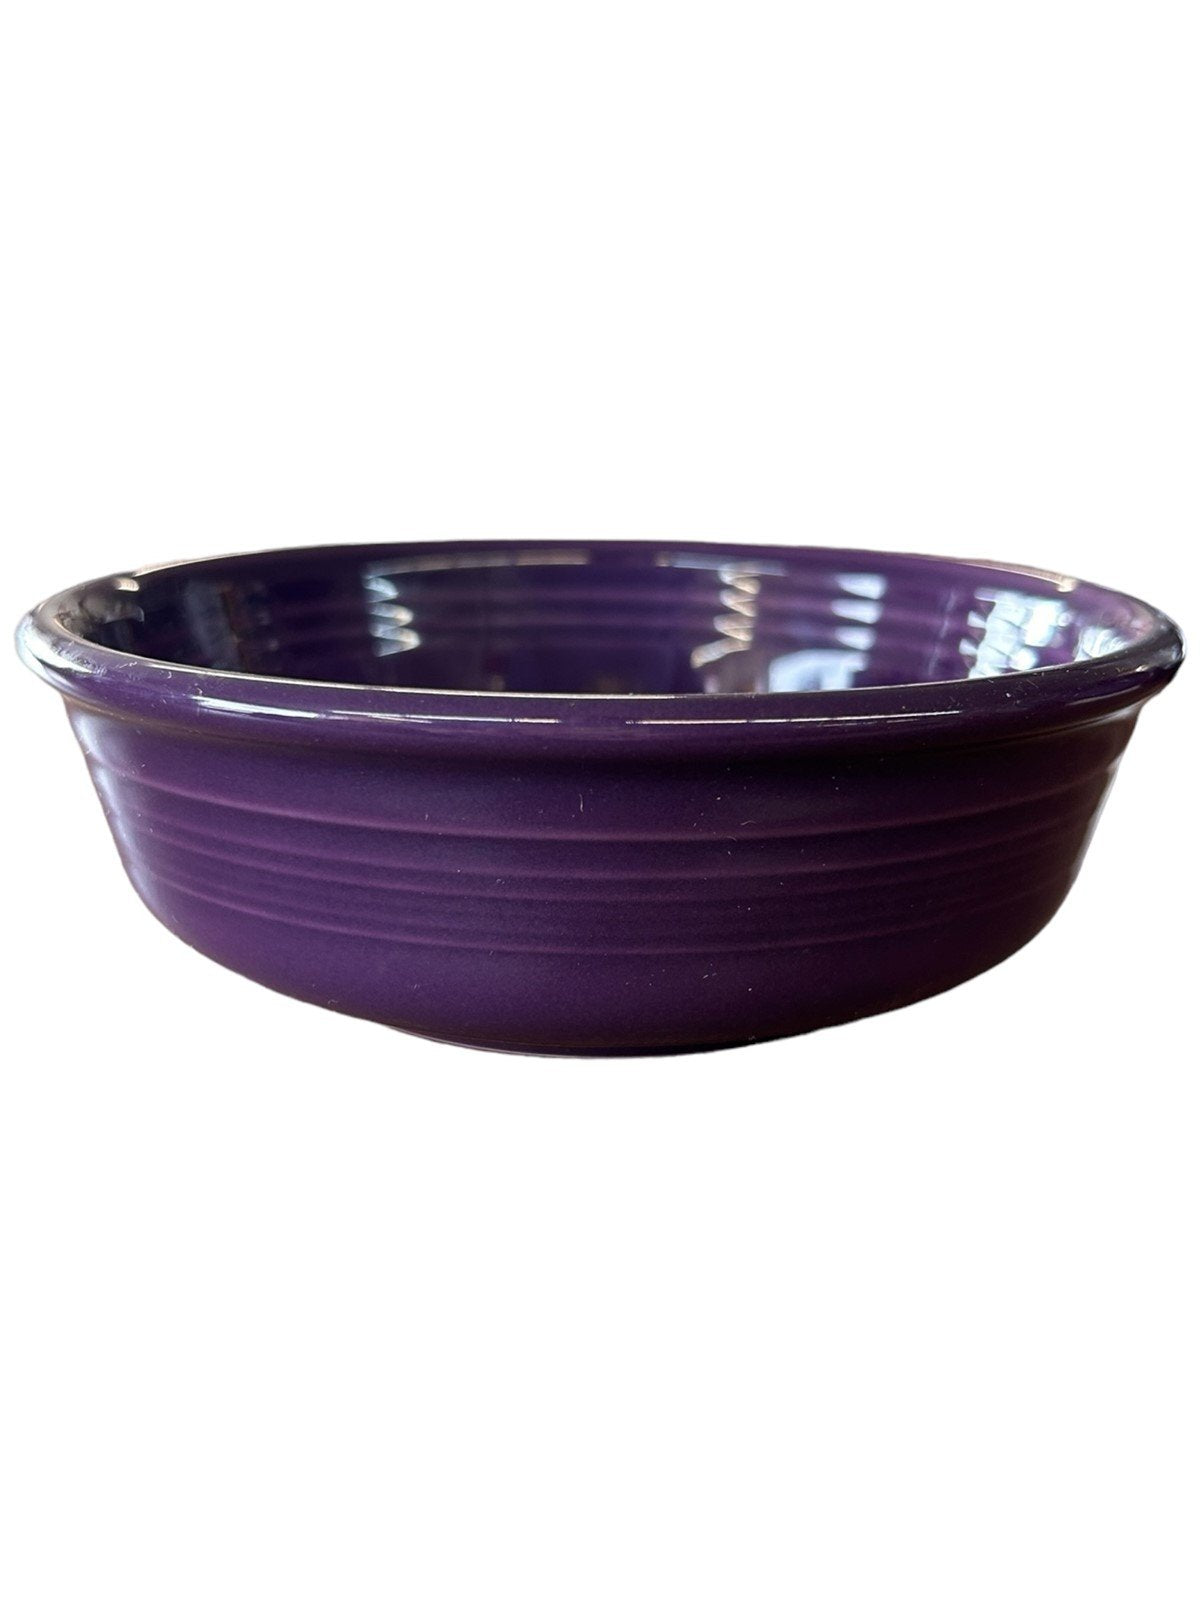 Fiesta - Mulberry Purple Small Bowl Homer Laughlin Ceramic Dish Kitchenware Home